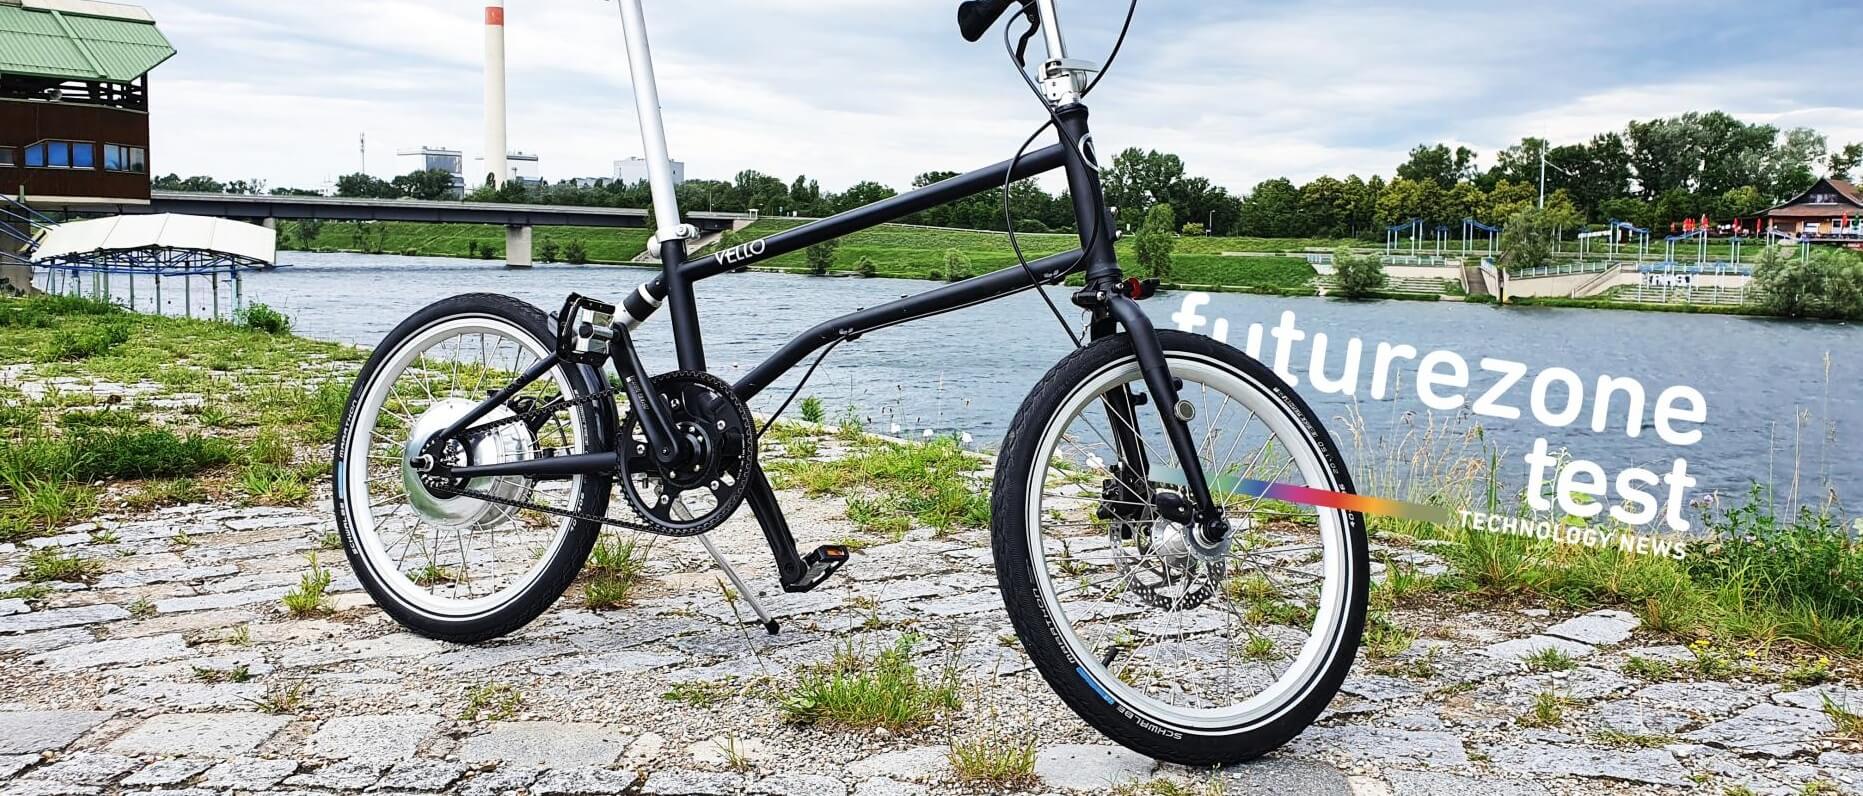 VELLO Bike+ im Test: Faltbares E-Bike lädt sich selbst